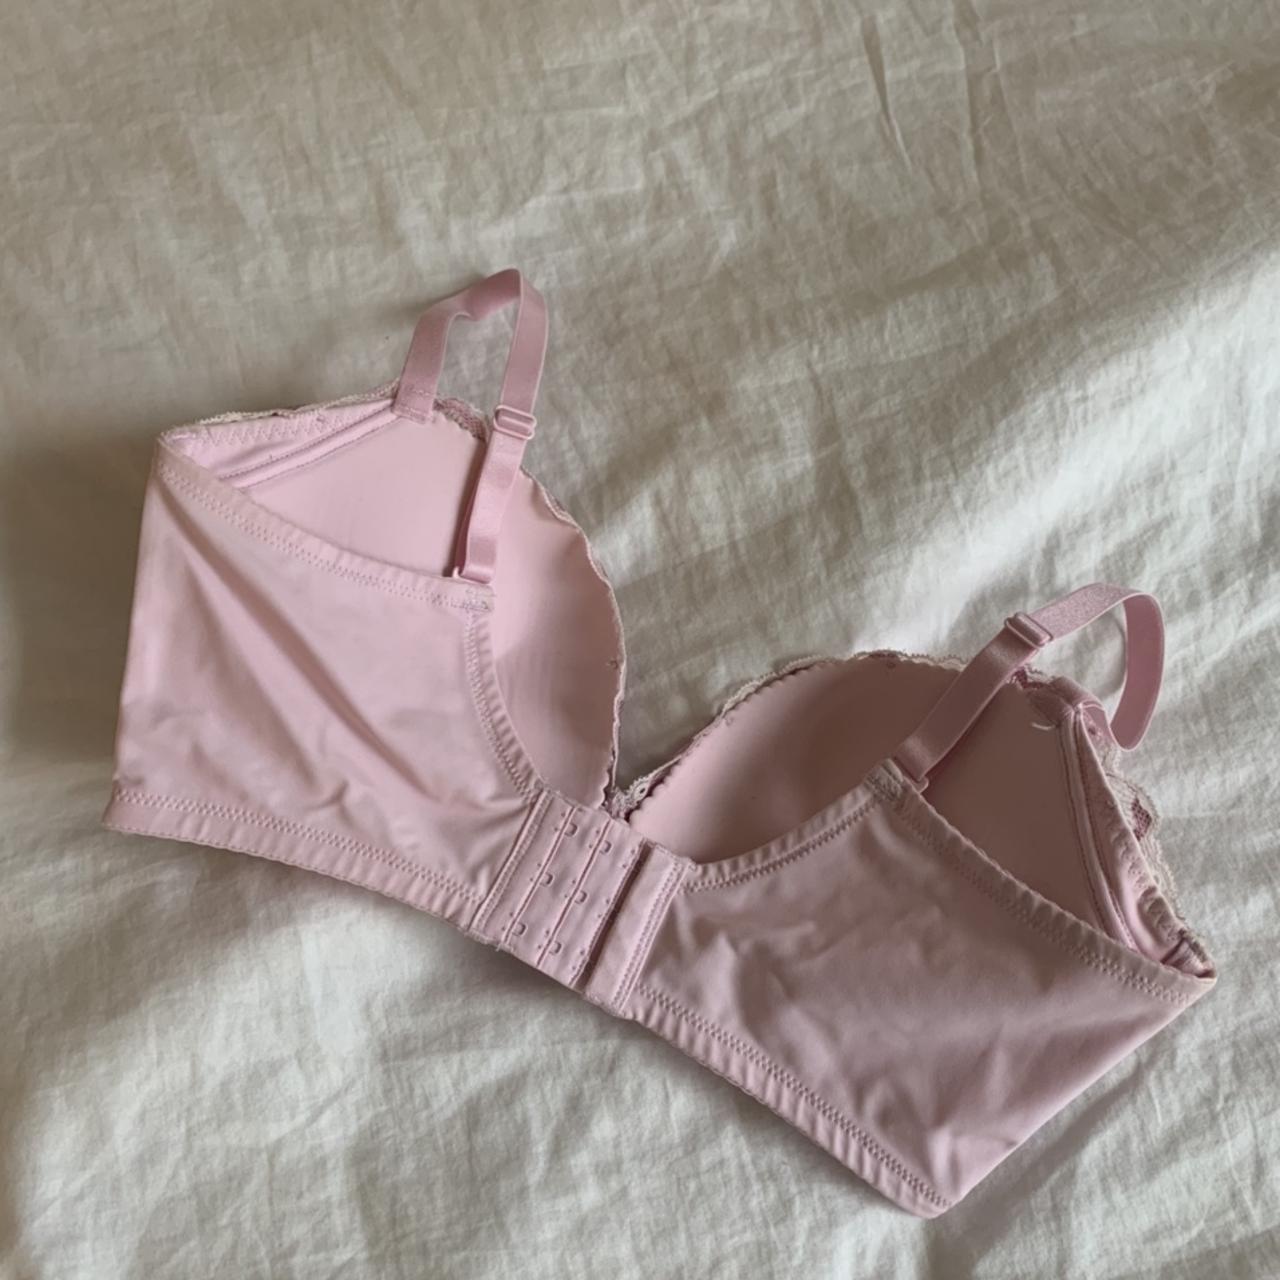 Aimerfeel pink bra Japan Size e70 (fits US B or C - Depop